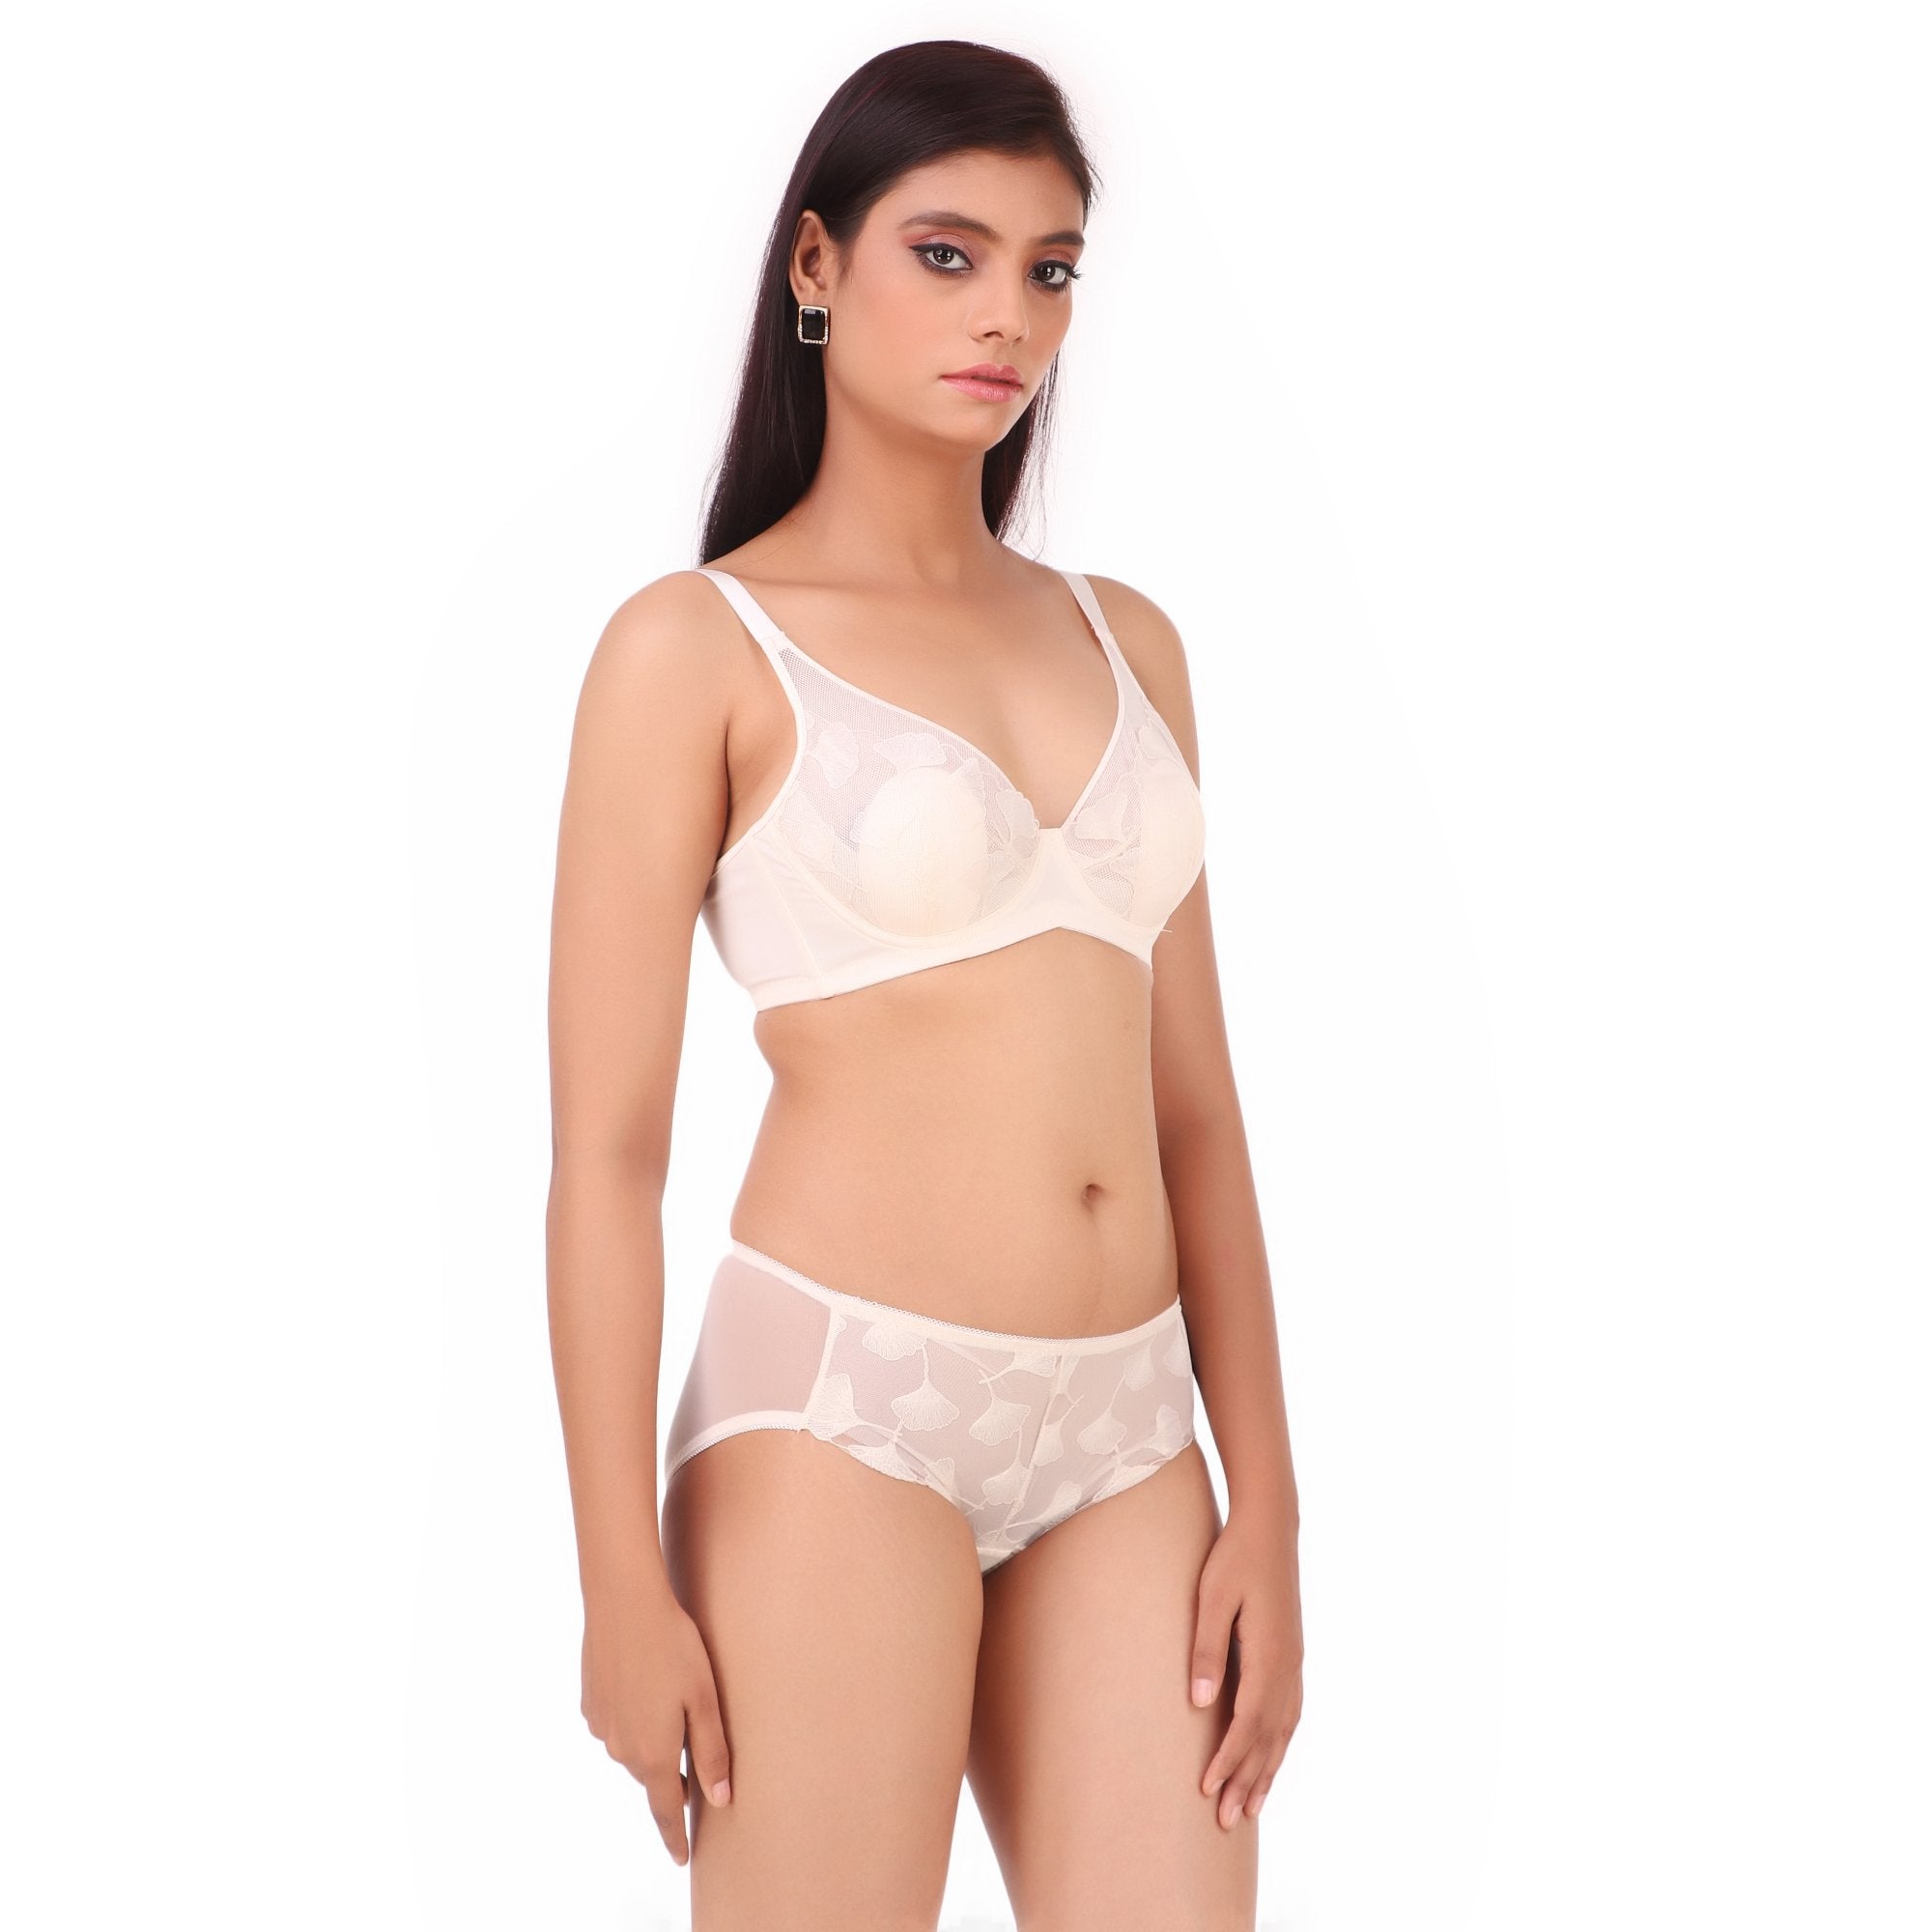 Buy online White Satin Bra And Panty Set from lingerie for Women